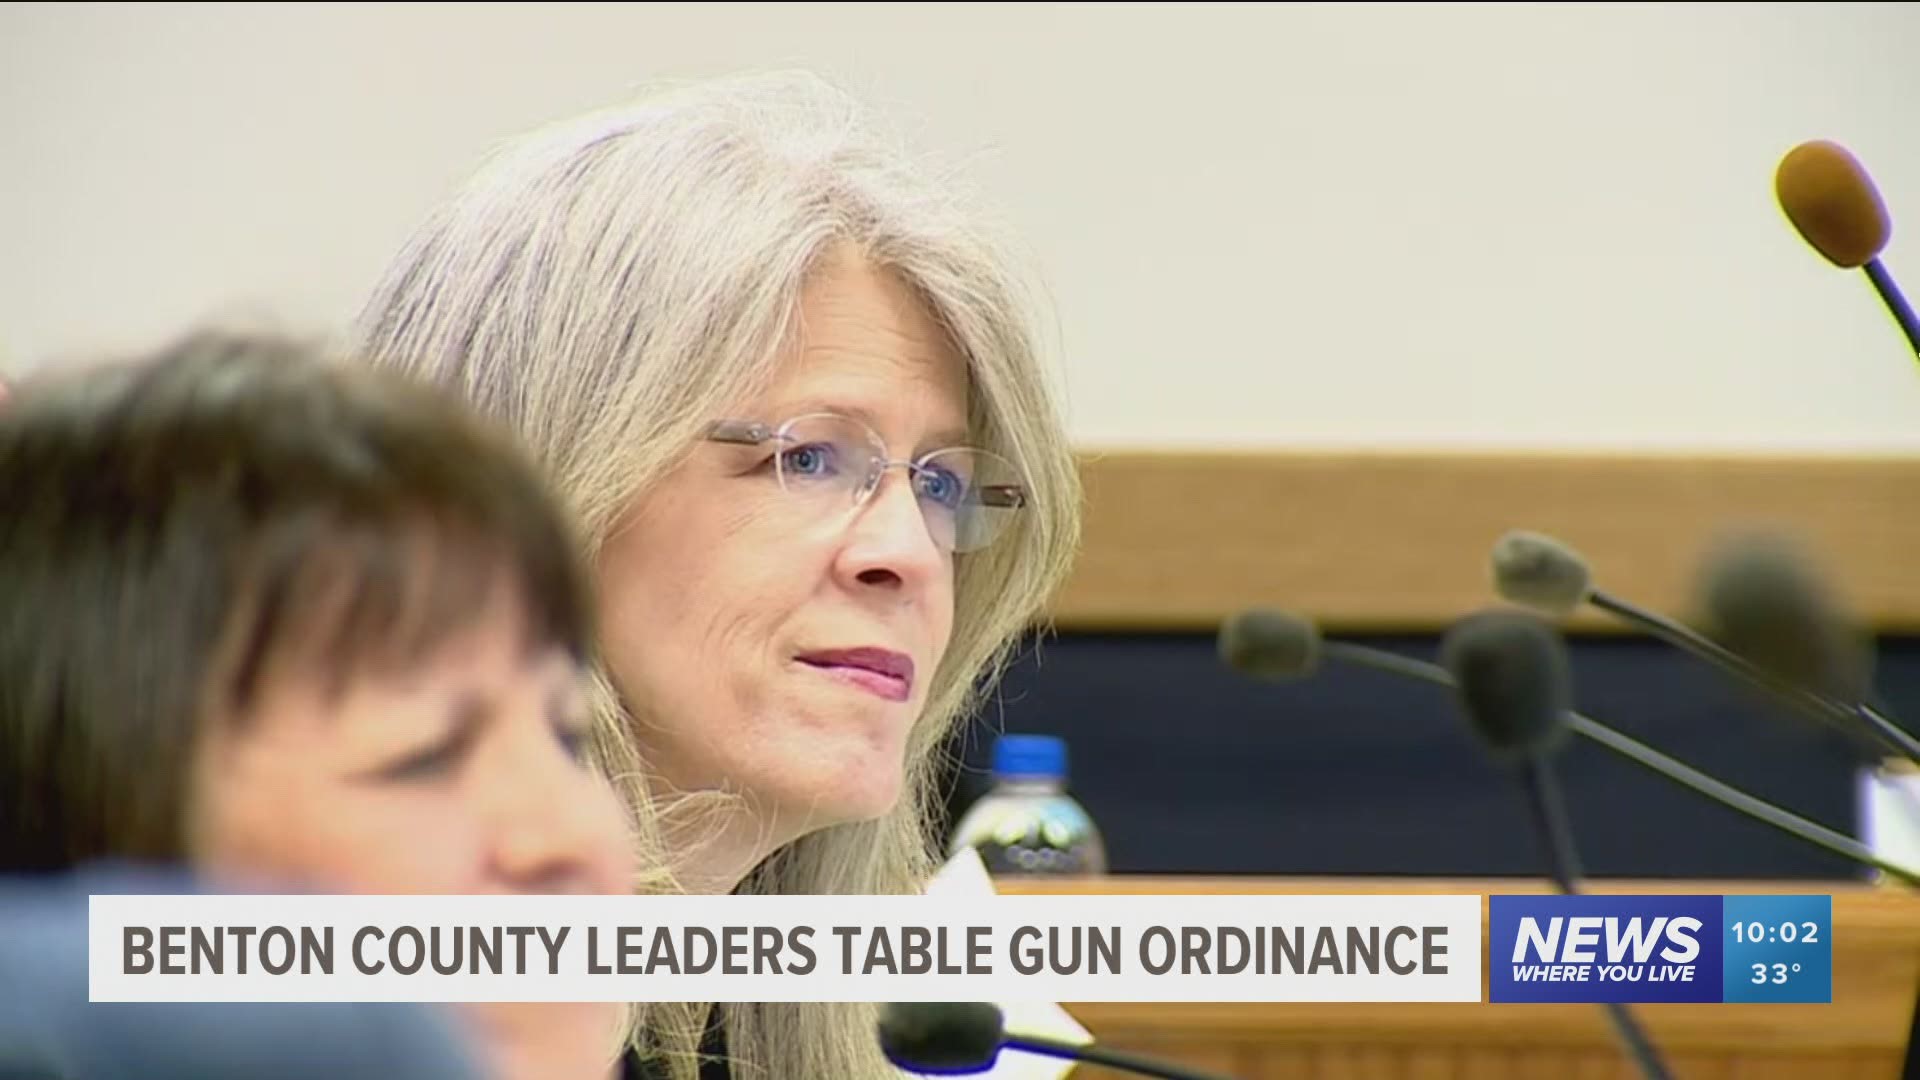 Benton County leaders table gun ordinance